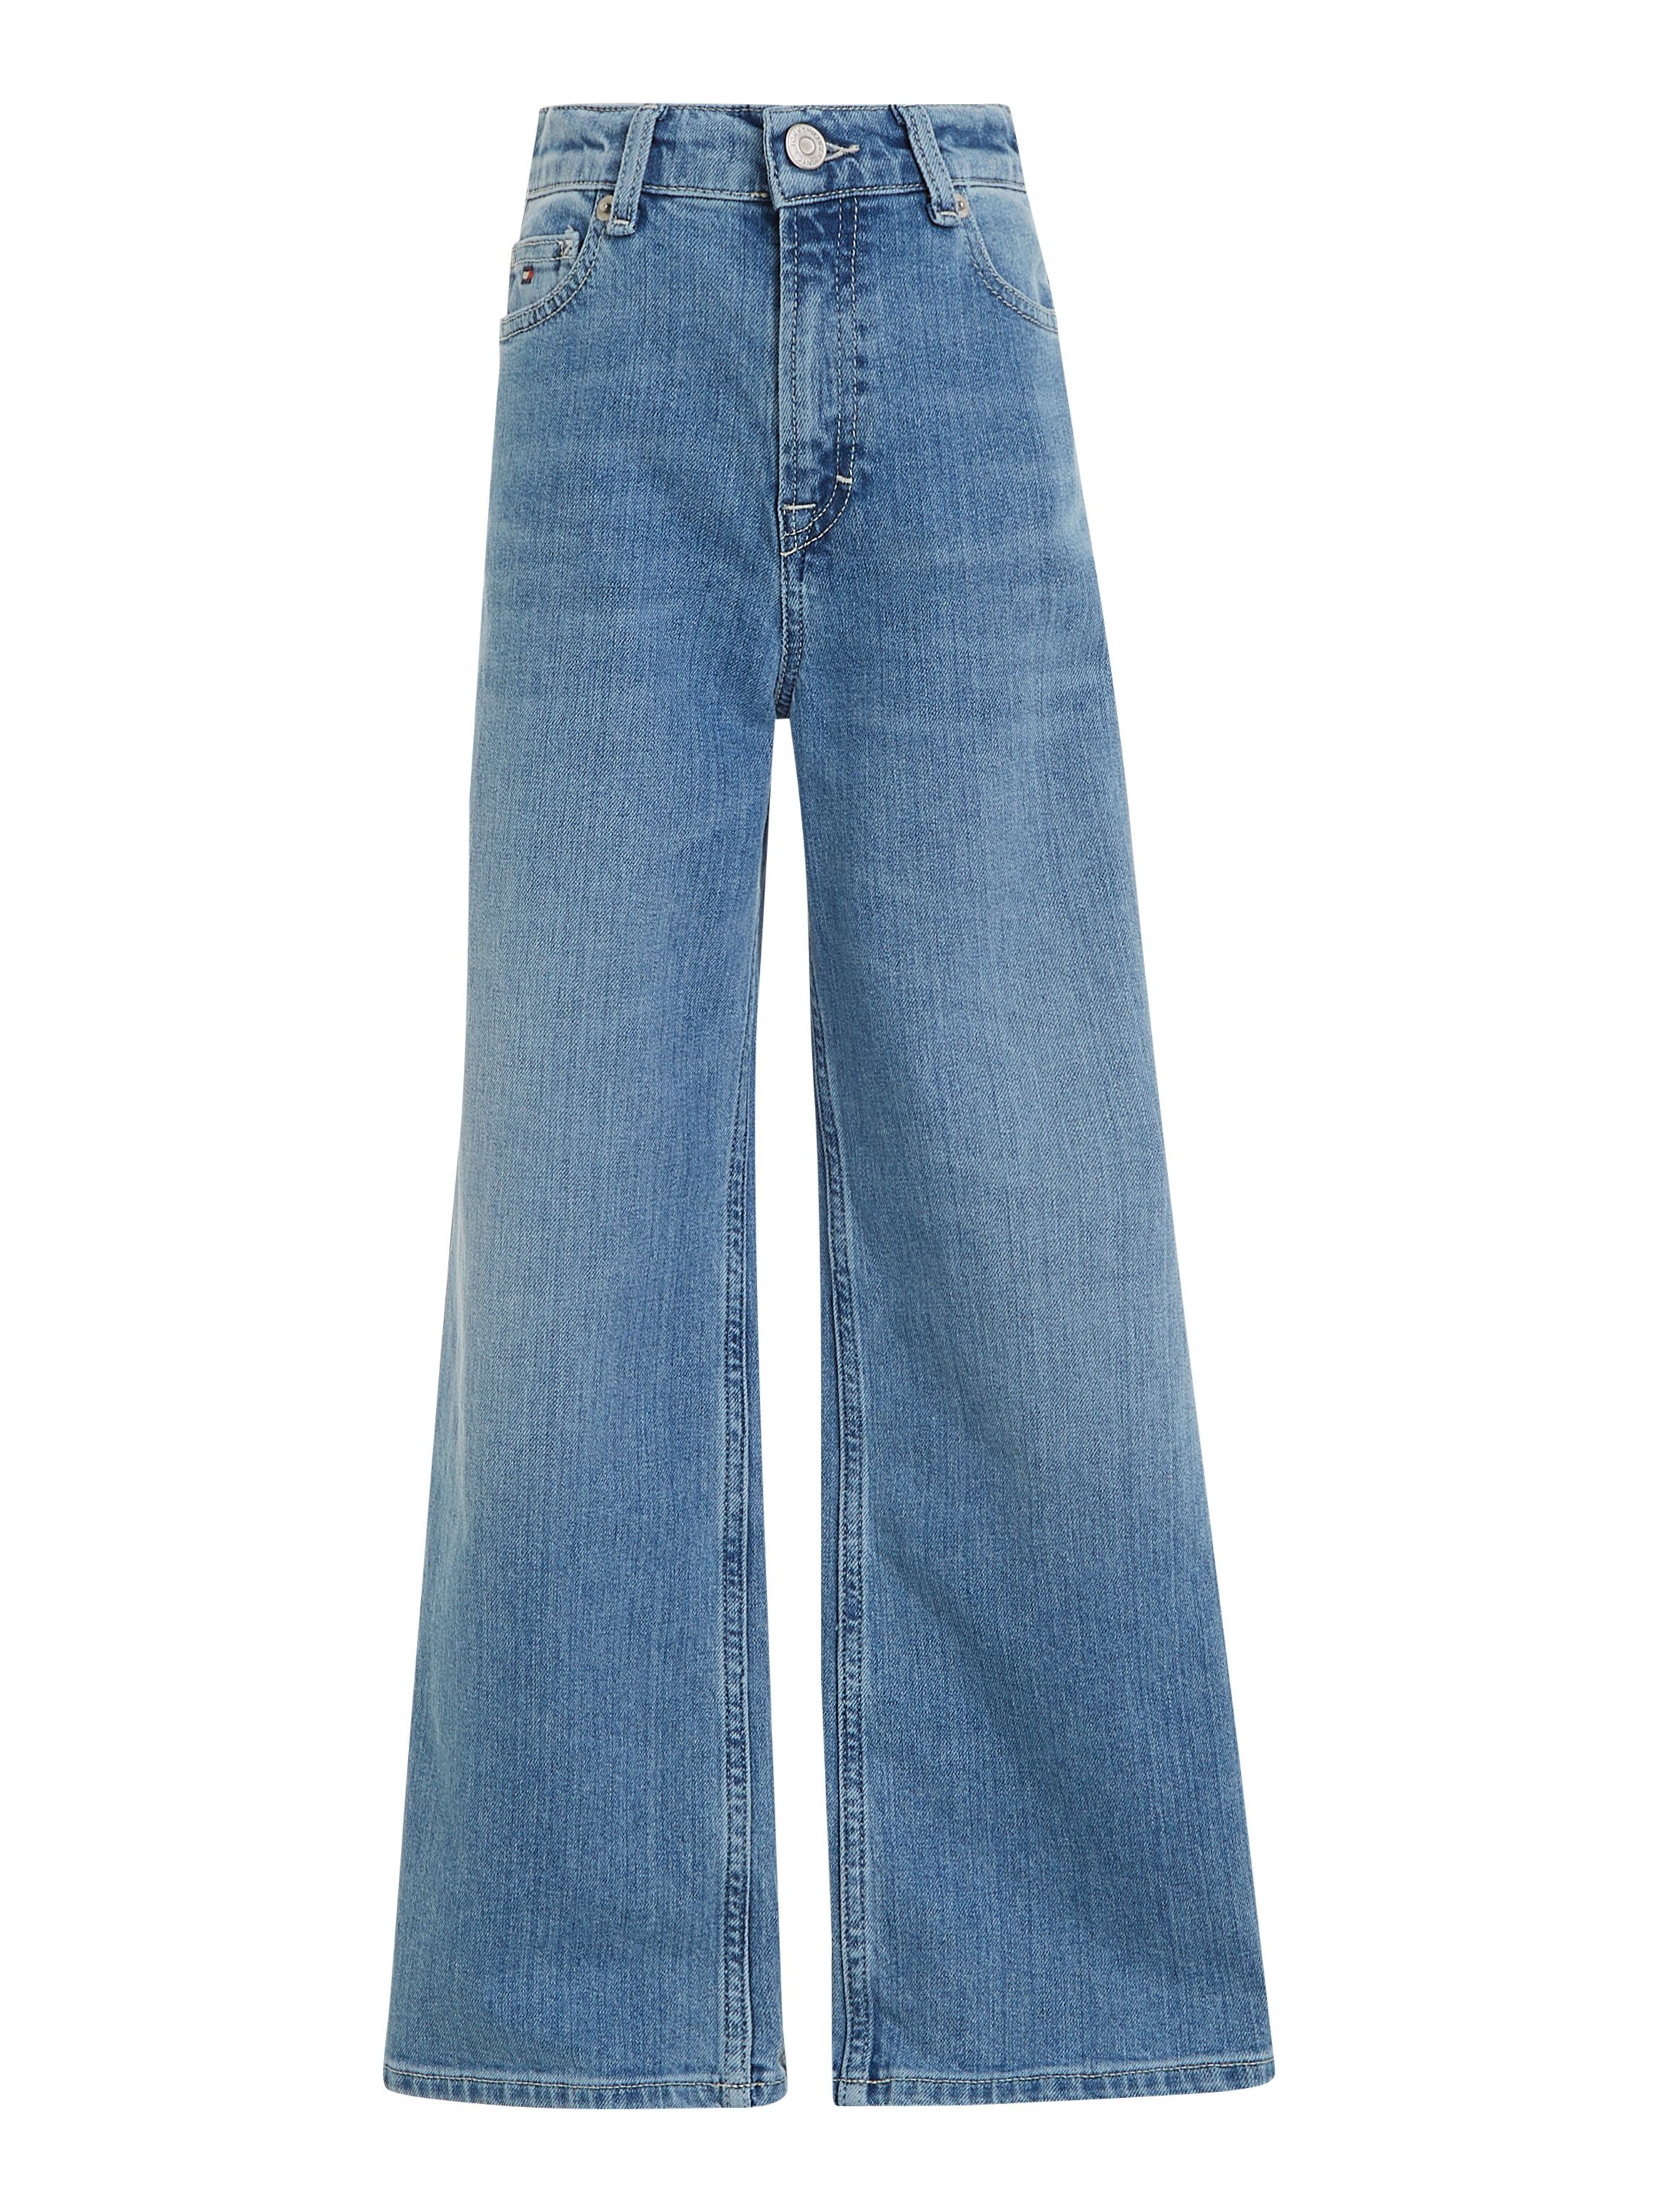 Hilfiger MABEL im Weite 5-Pocket-Style Tommy Jeans MID WASH